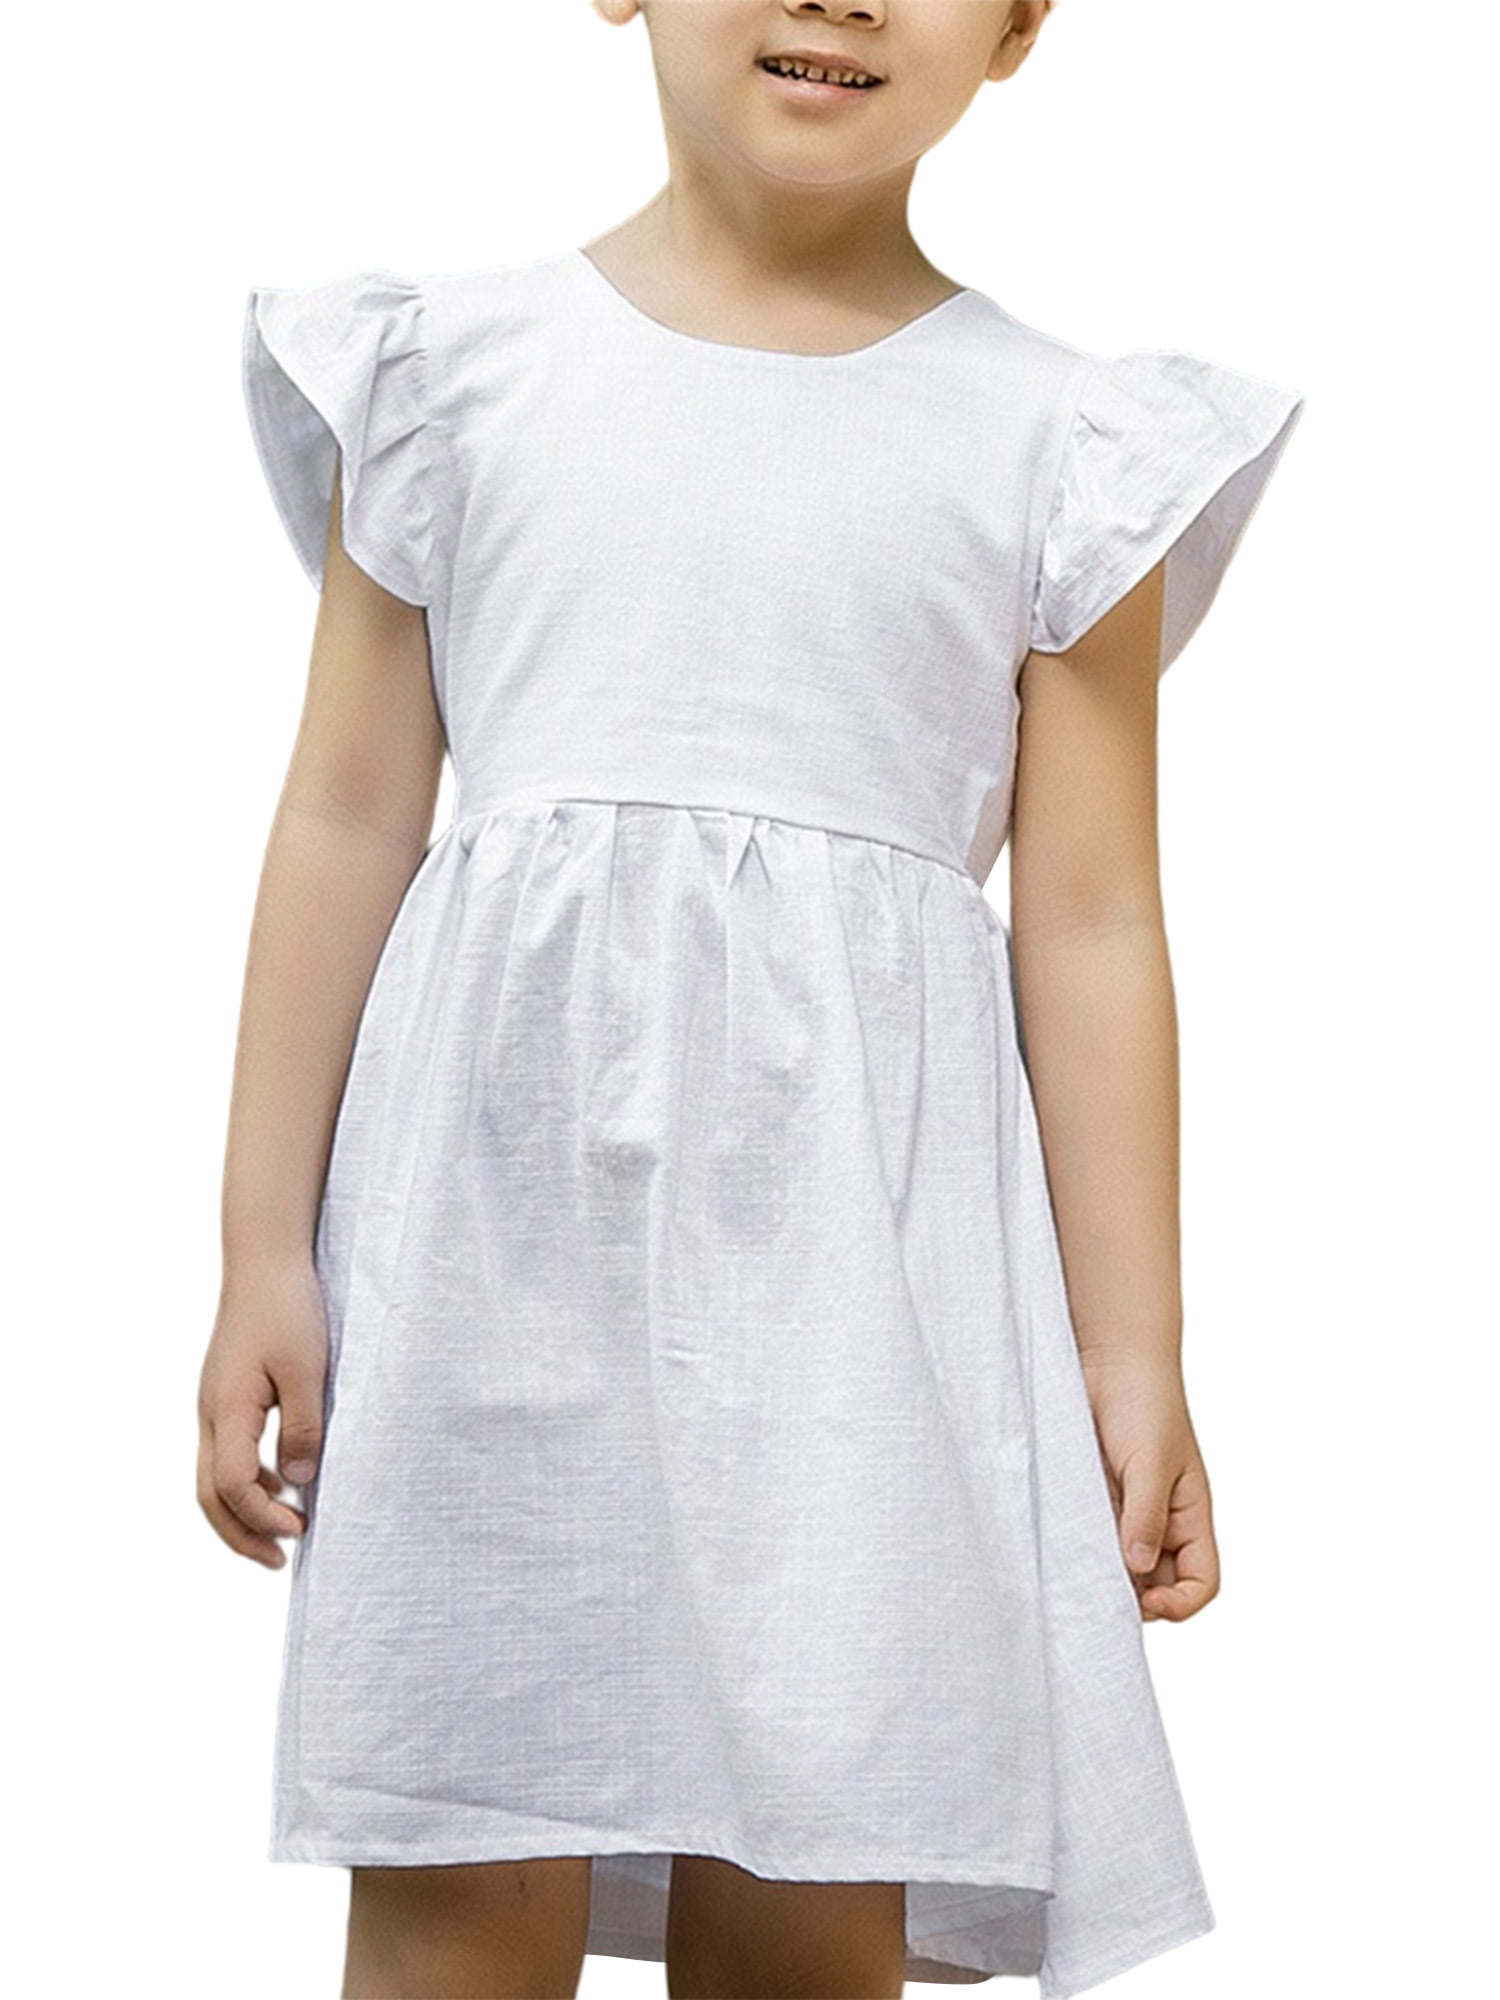 Kids Girls Hand-Smocked White Sleeveless Dress Sundress Birthday Party Pageant 